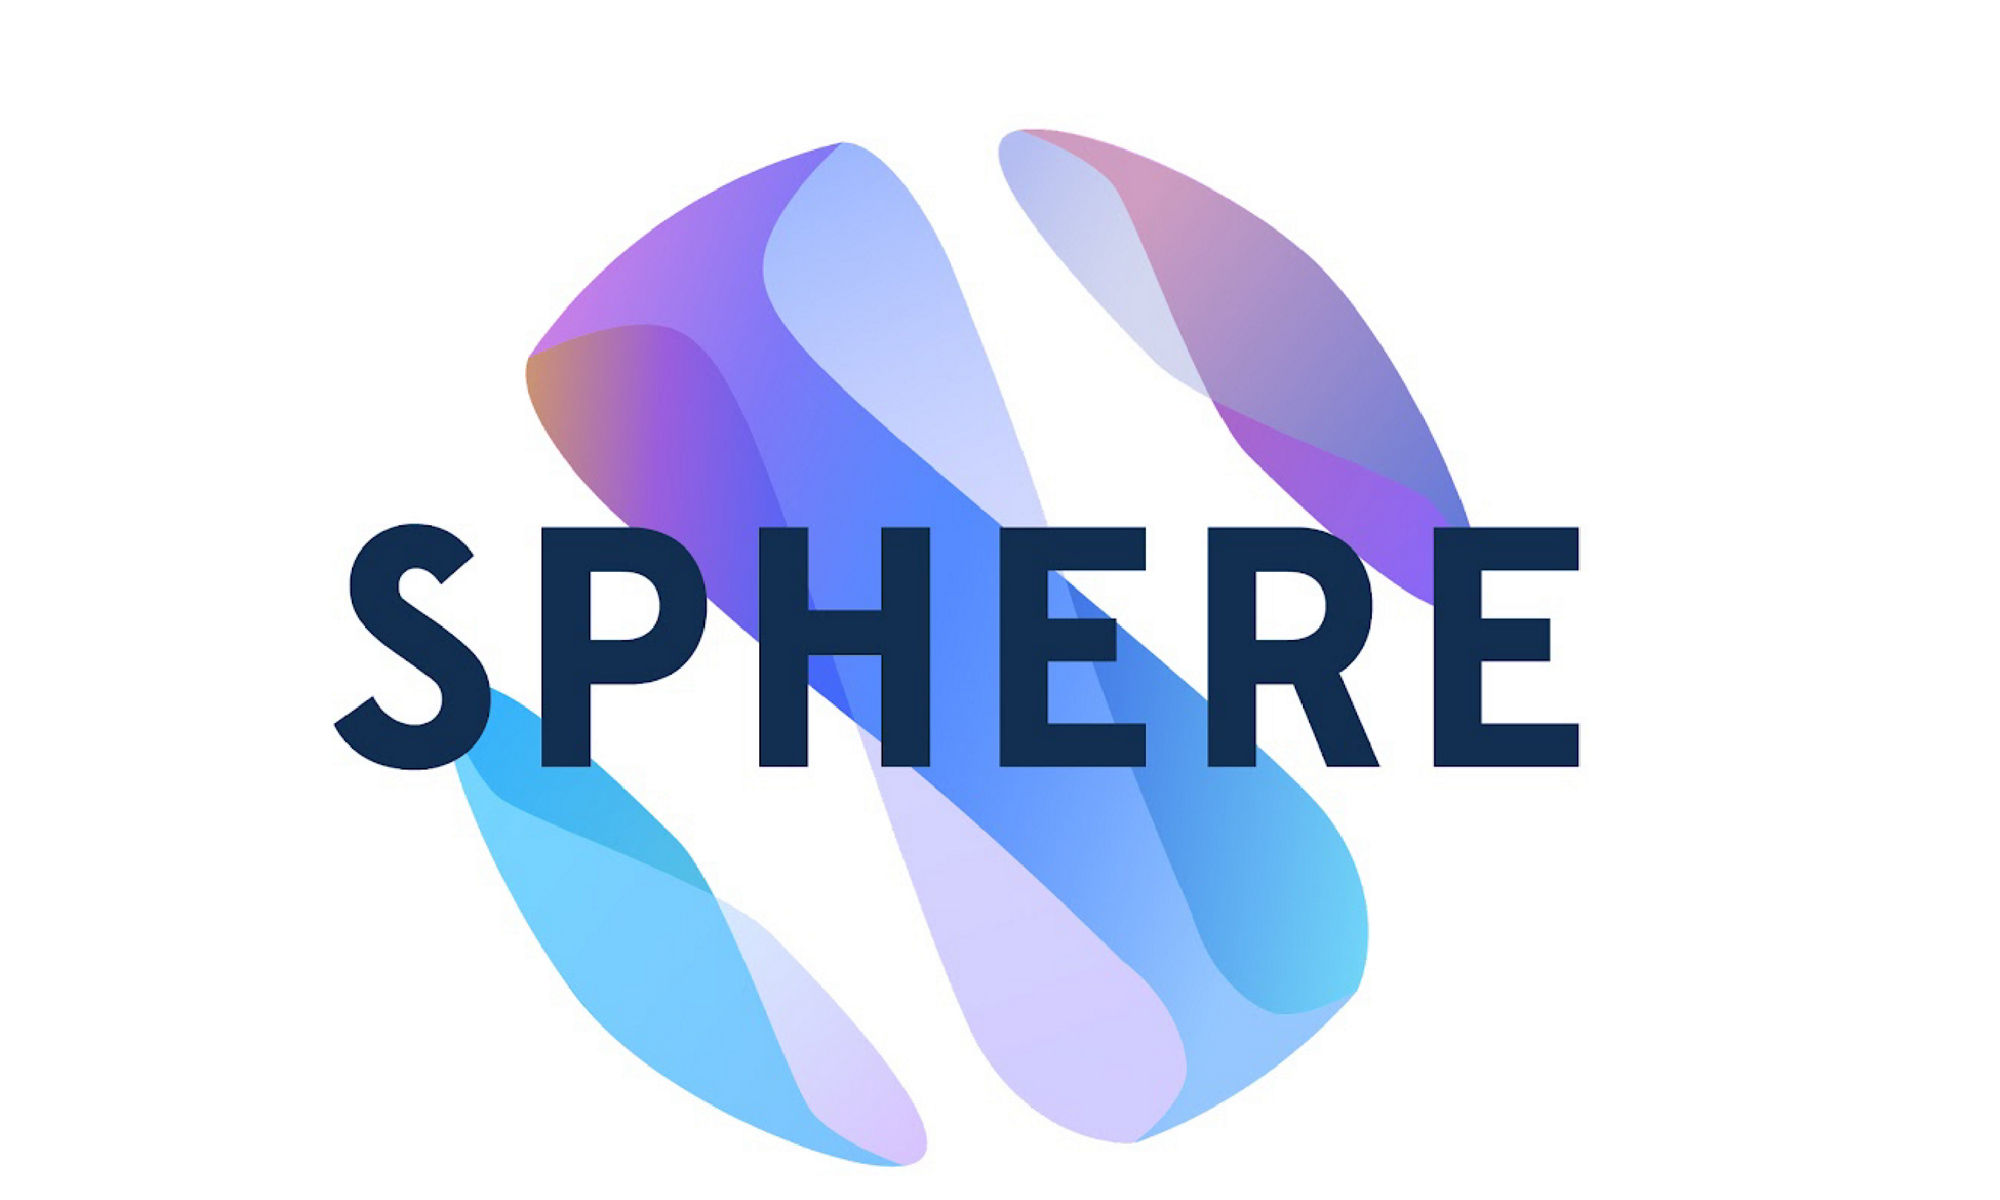 Sphere company logo